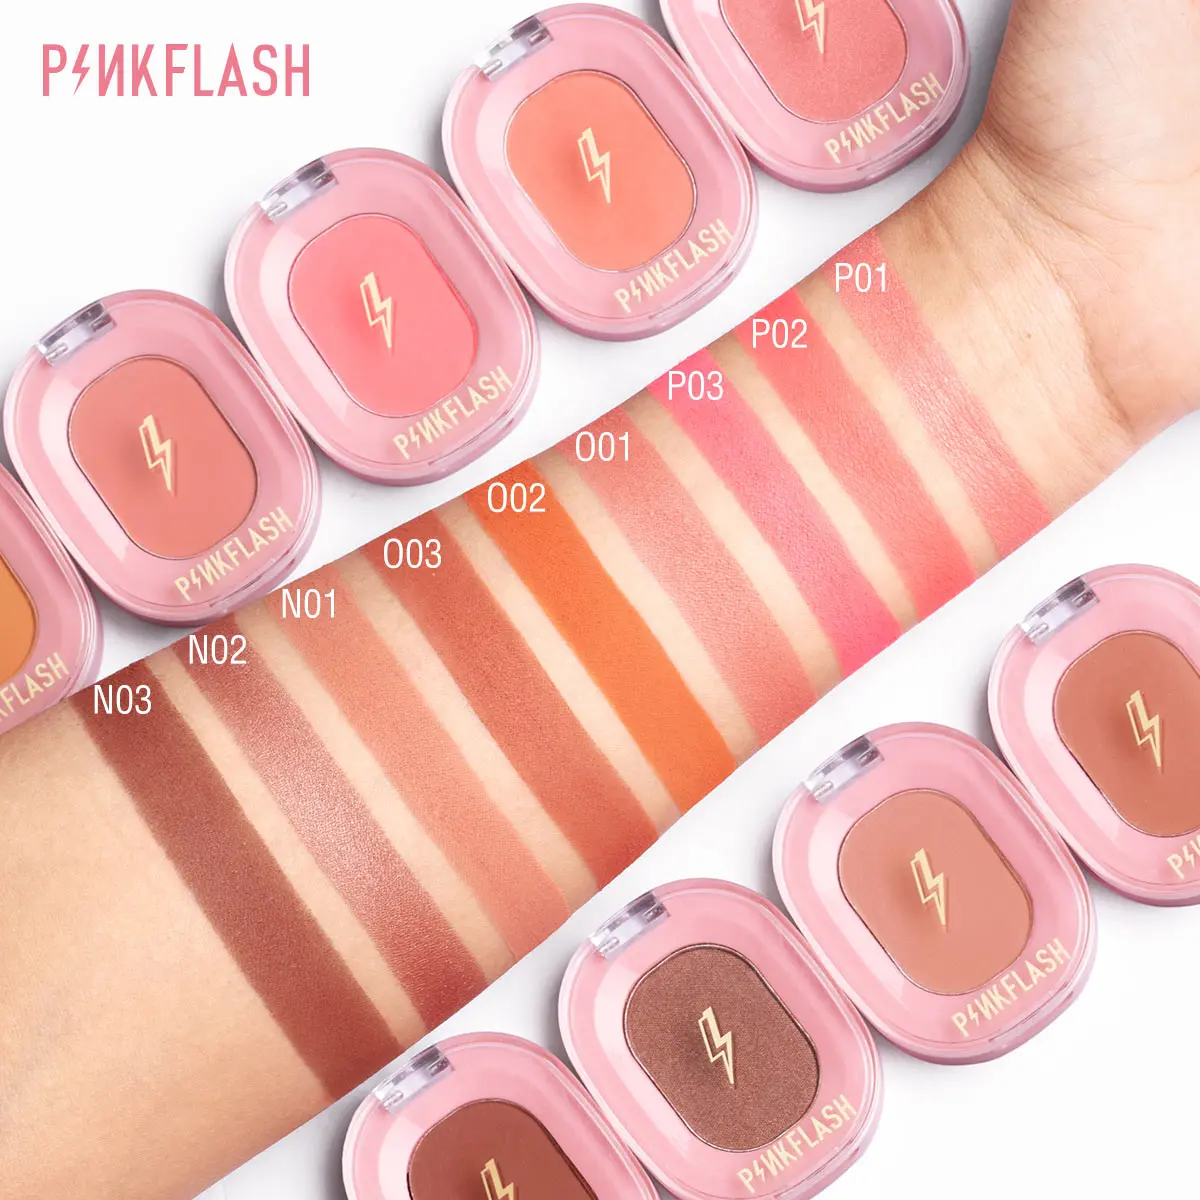 

Pinkflash Blush Peach Palette 11 Color Face Mineral Pigment Cheek Blusher Powder Makeup Professional Contour Shadow Pink Blusher